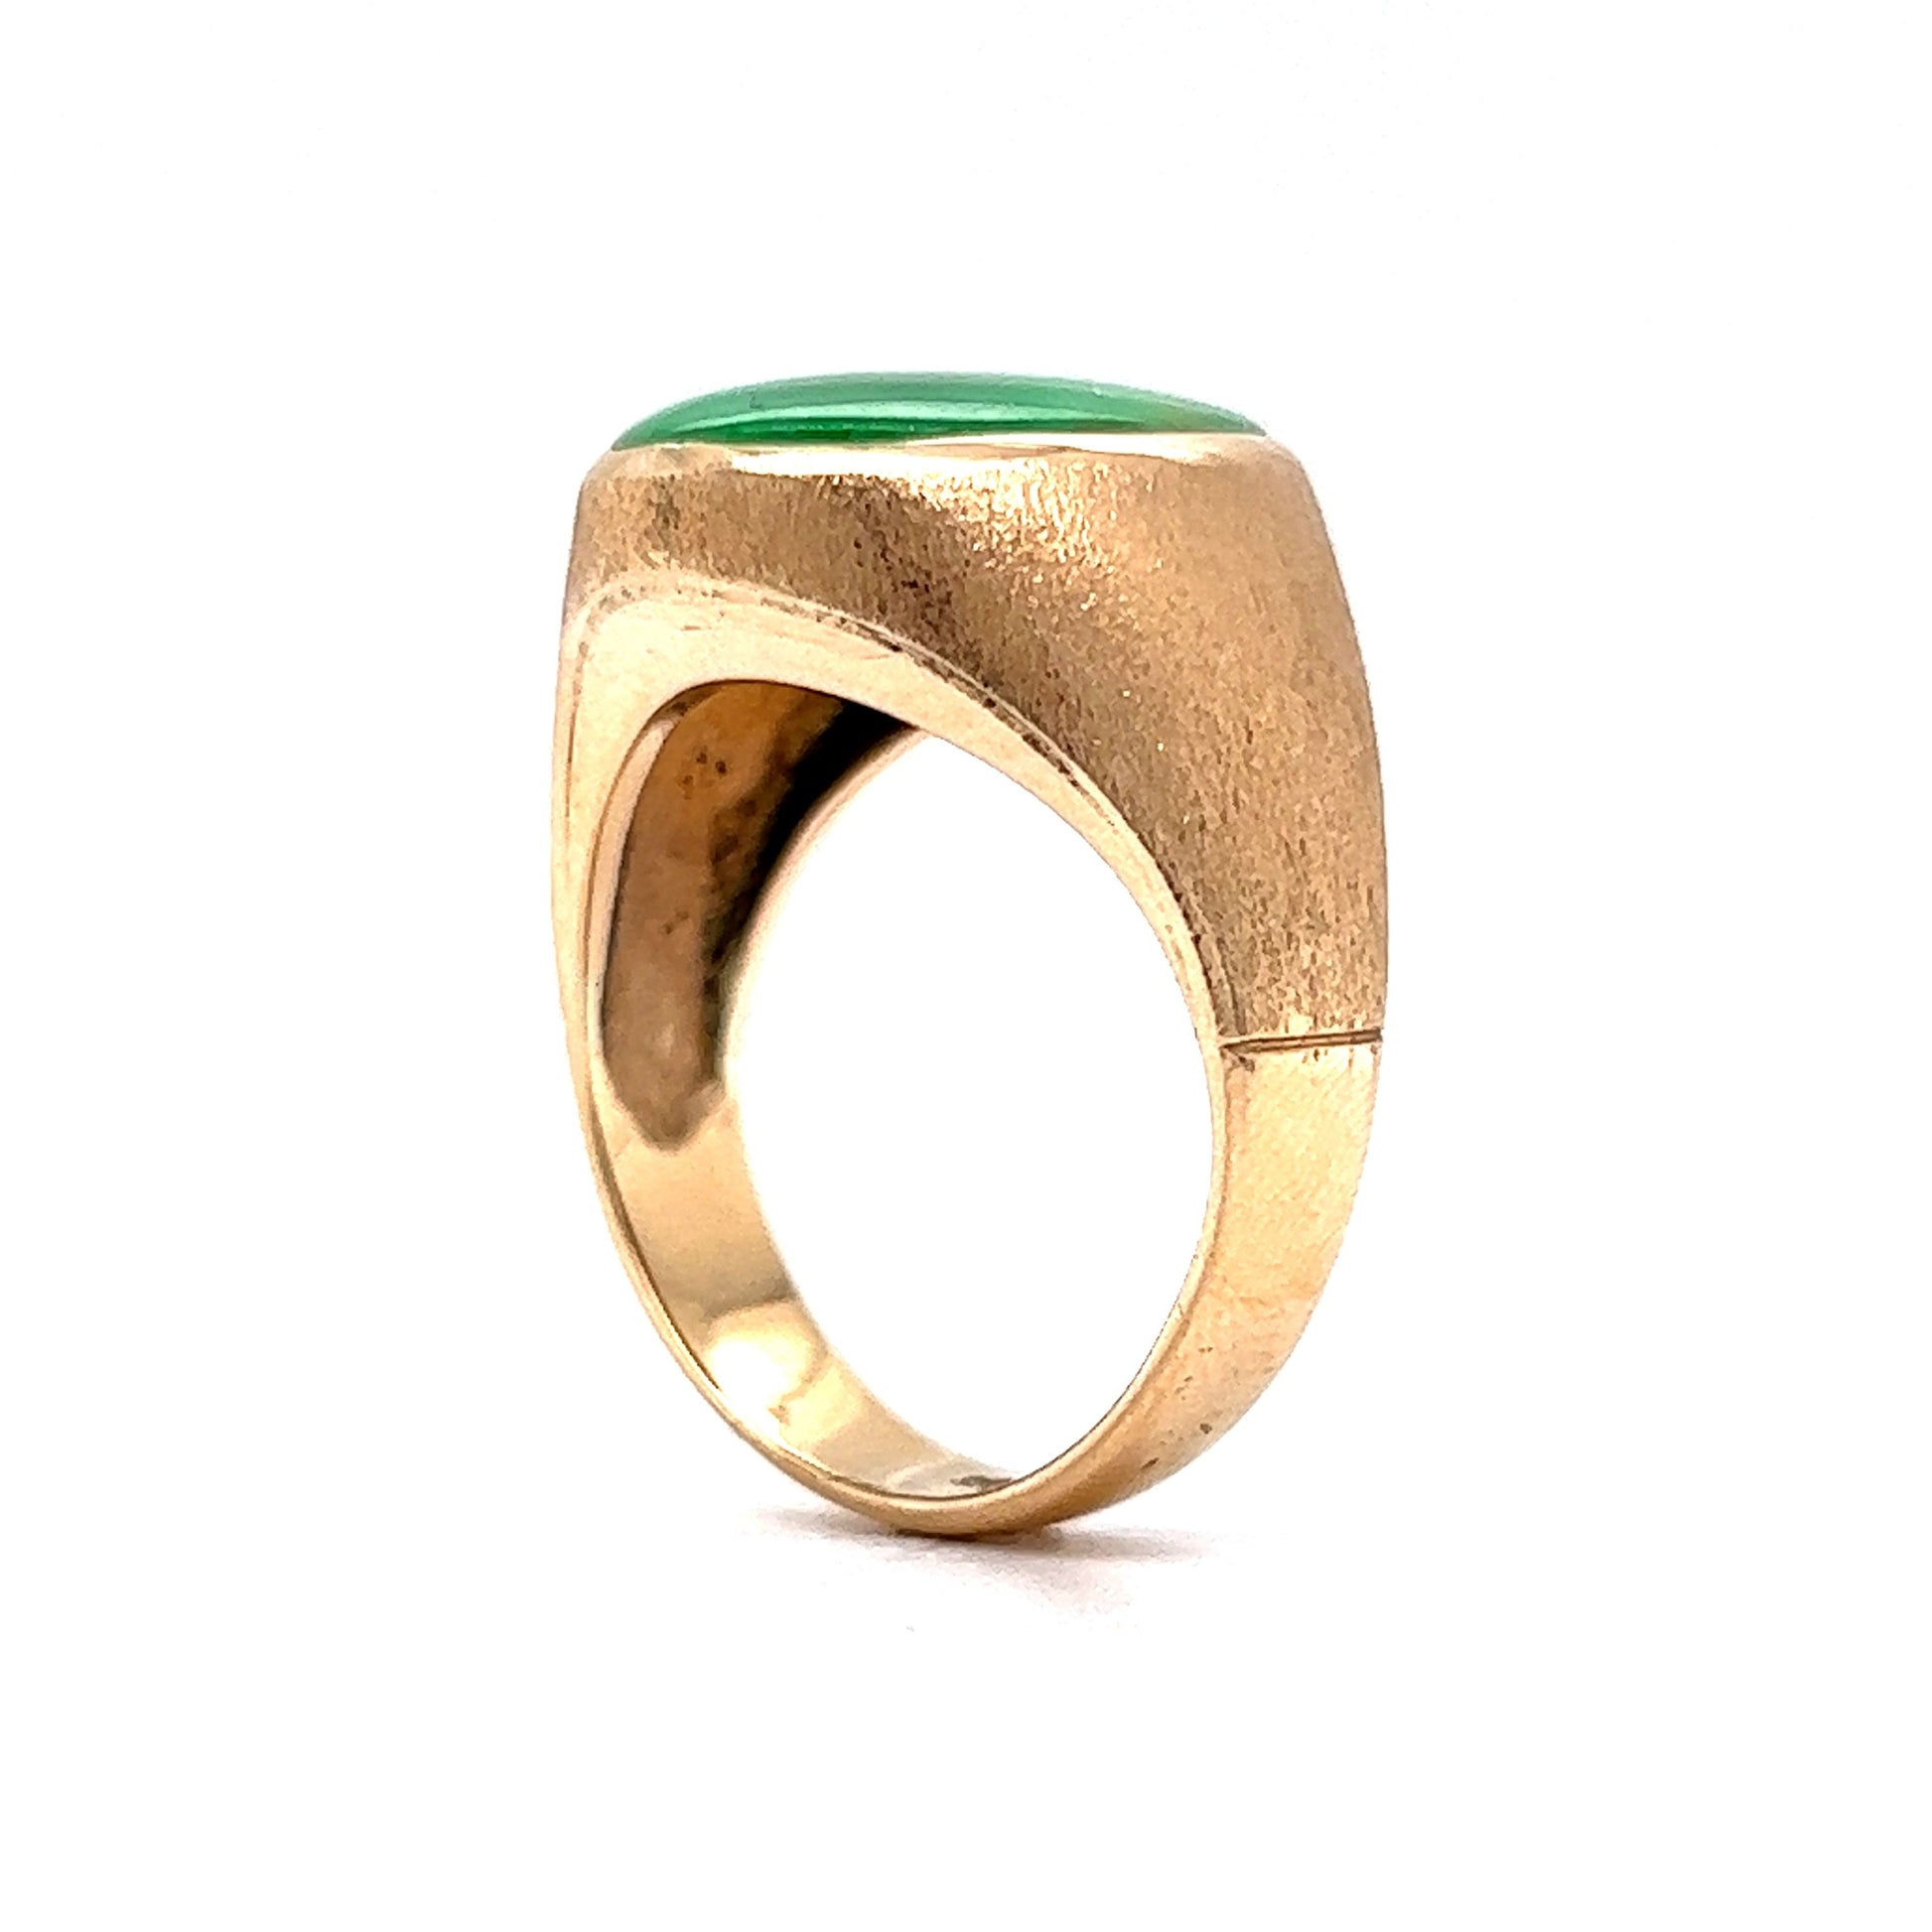 Mid-Century Textured Bezel Set Jade Cocktail Ring in 14k Yellow Gold